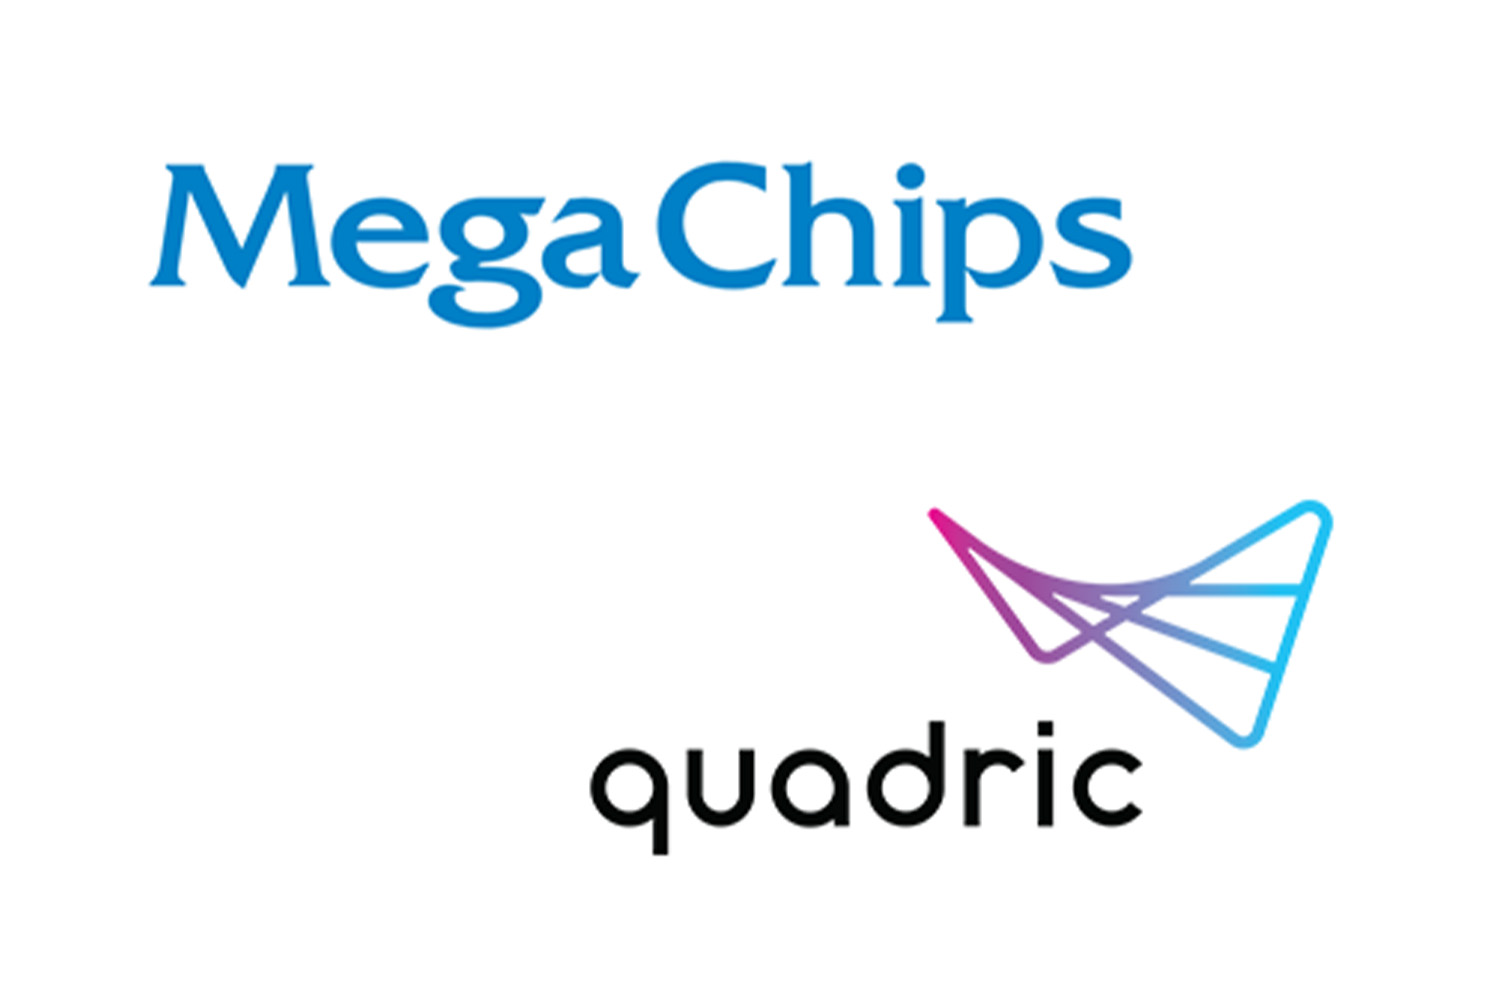 MegaChips and Quadric Logos